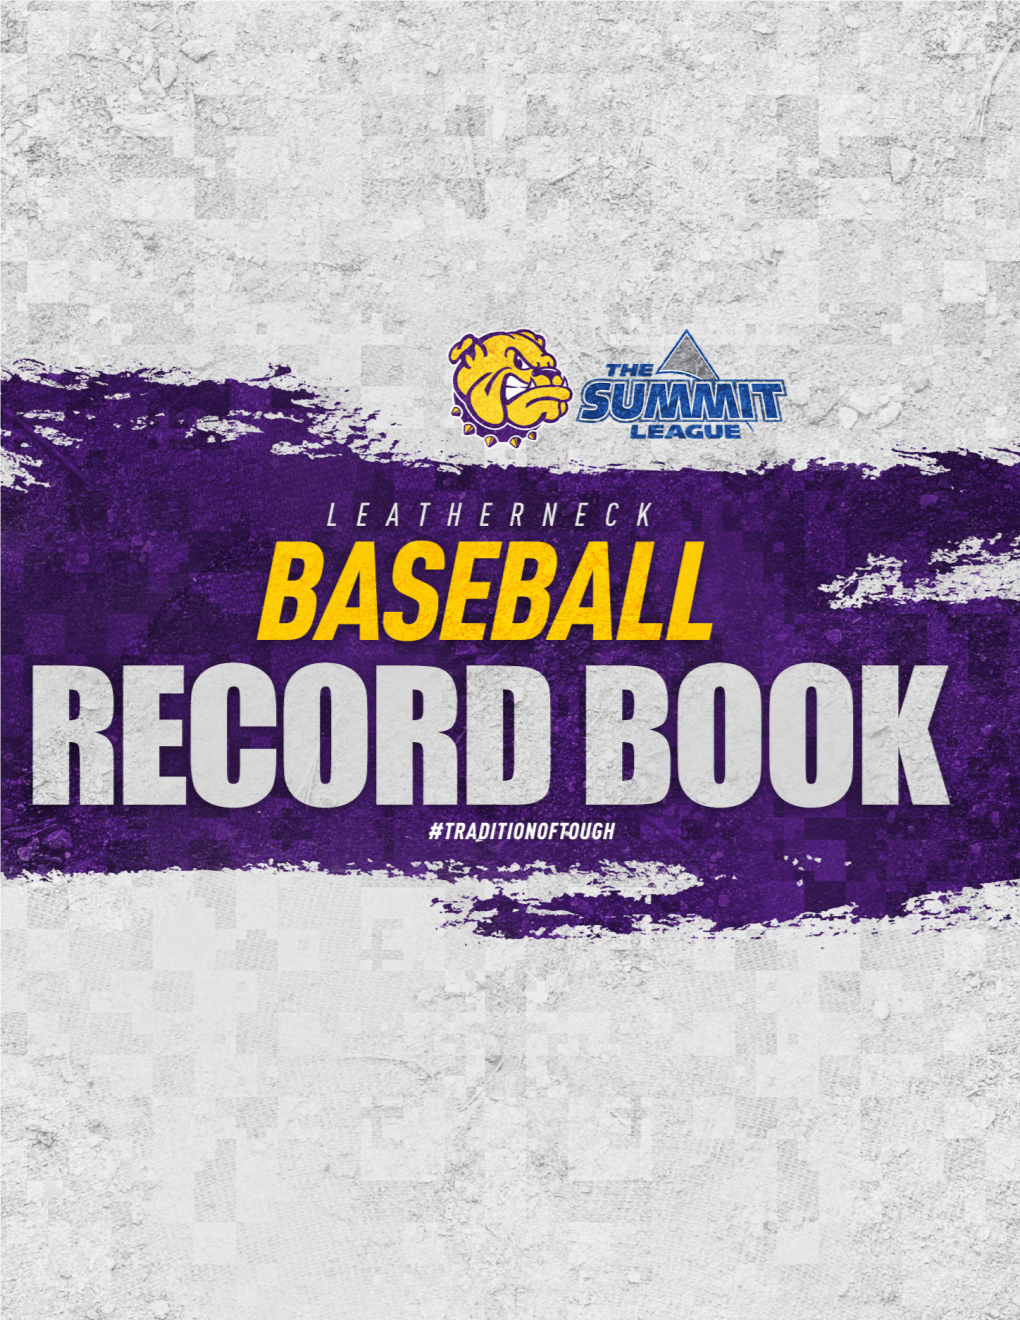 Western Baseball Record Book Coaching Summary Western Baseball Record Book